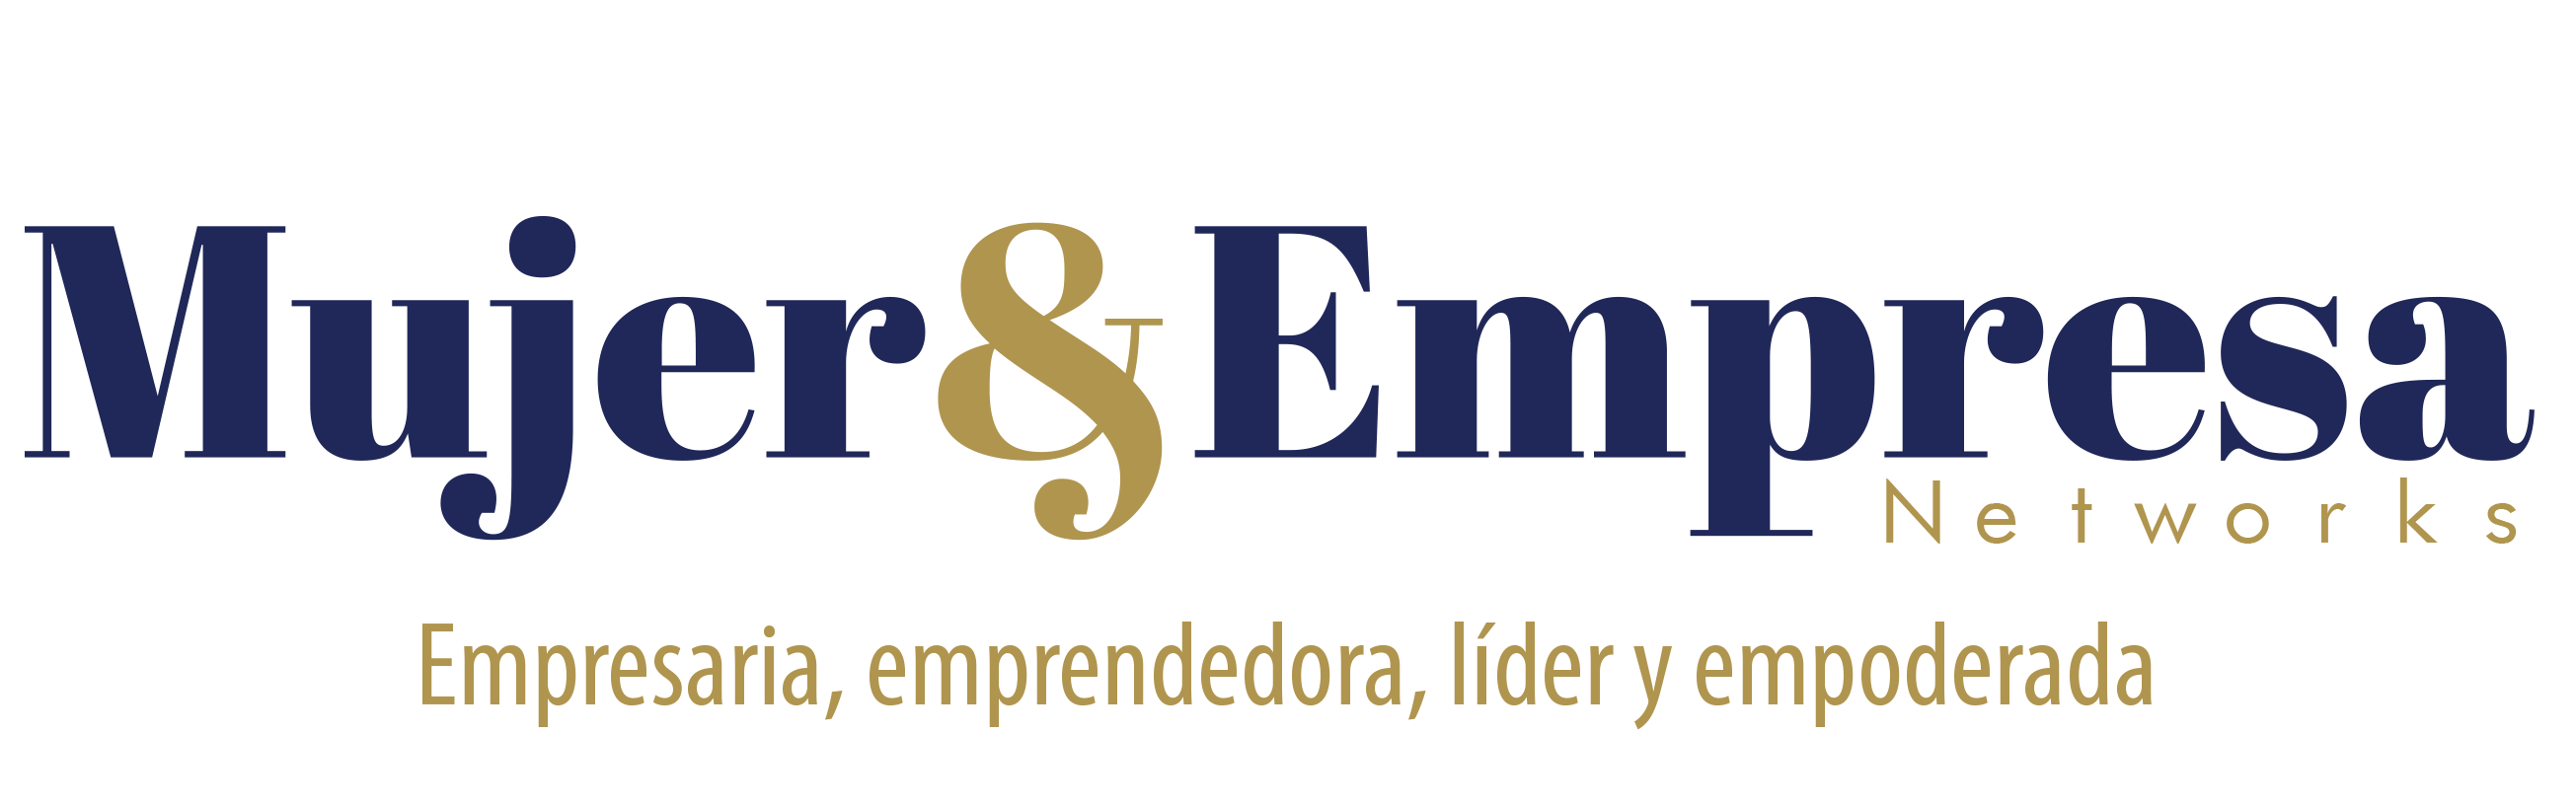 logo_mujer_empresa